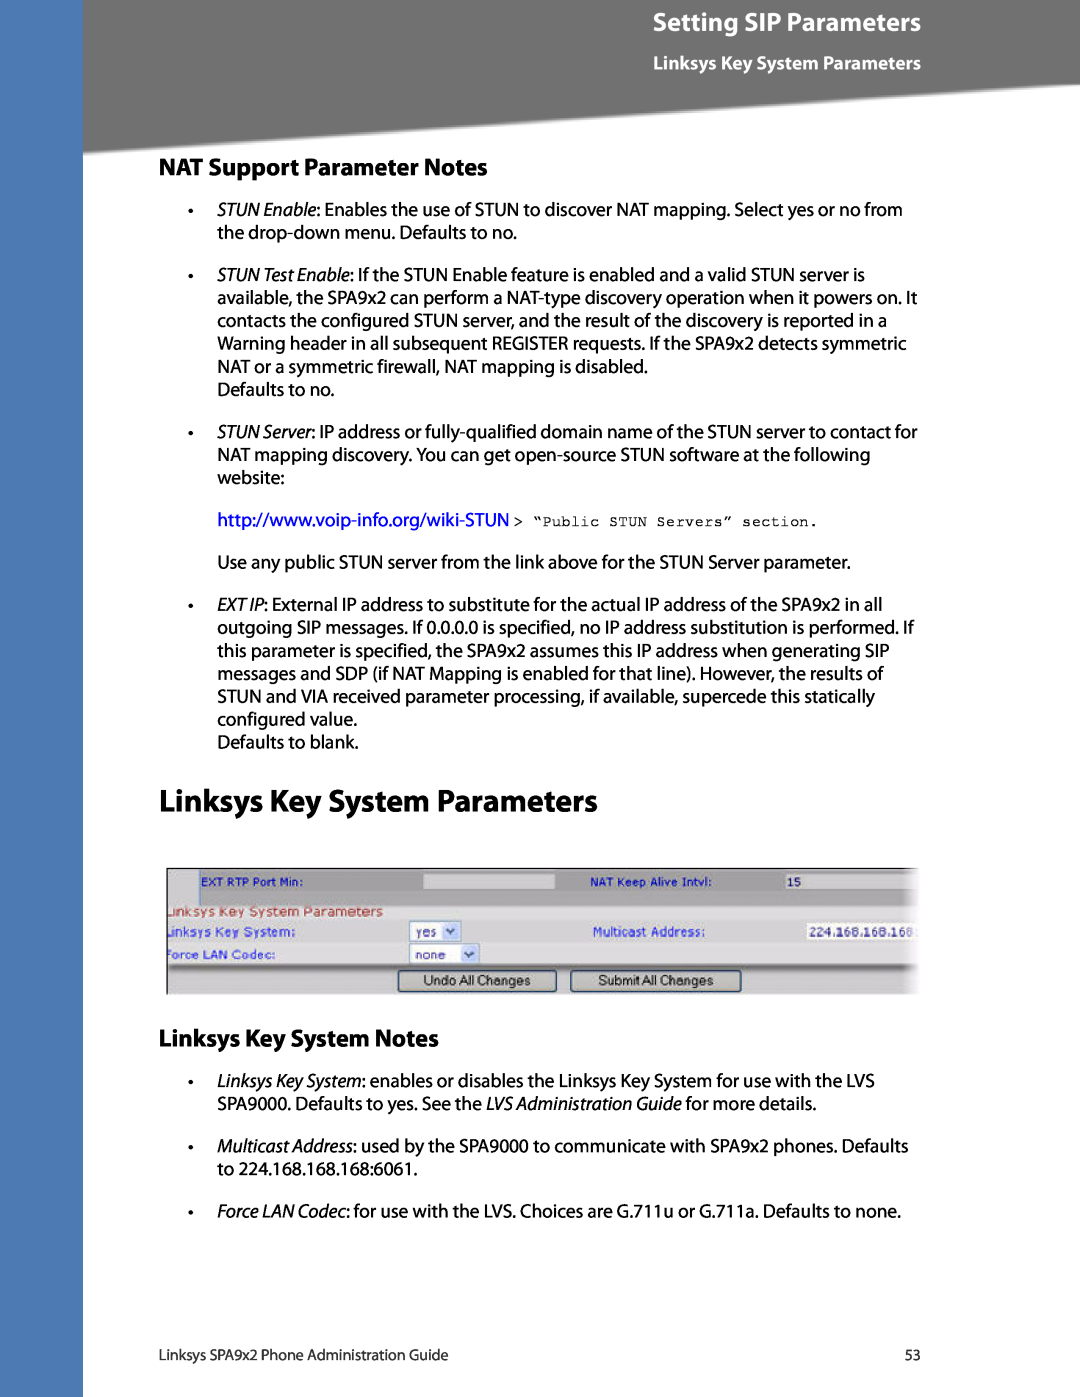 Linksys SPA962, SPA942, SPA932, SPA922 Linksys Key System Parameters, NAT Support Parameter Notes, Linksys Key System Notes 